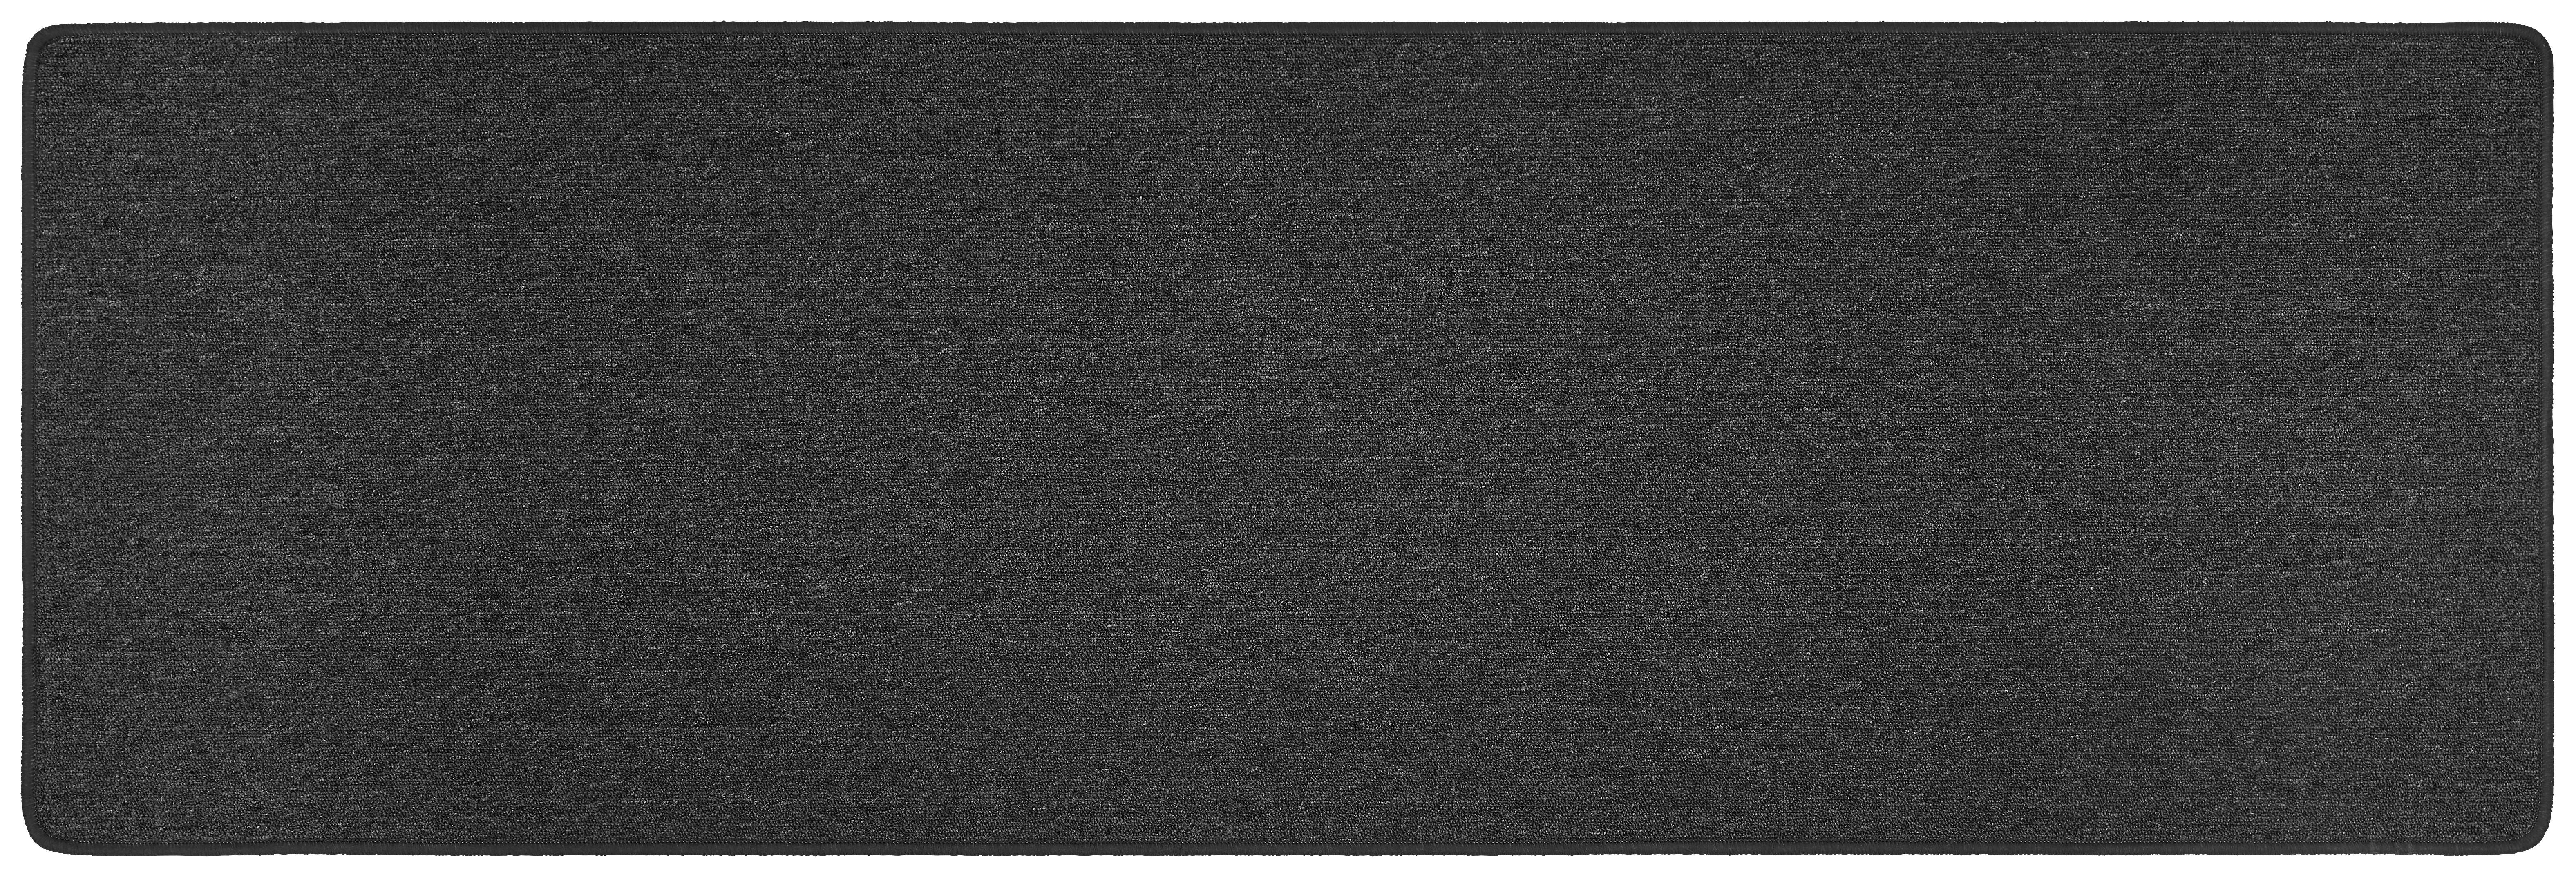 Teppich Läufer Anthrazit John 66x200 cm - Anthrazit, Basics, Kunststoff (66/200cm) - Ondega